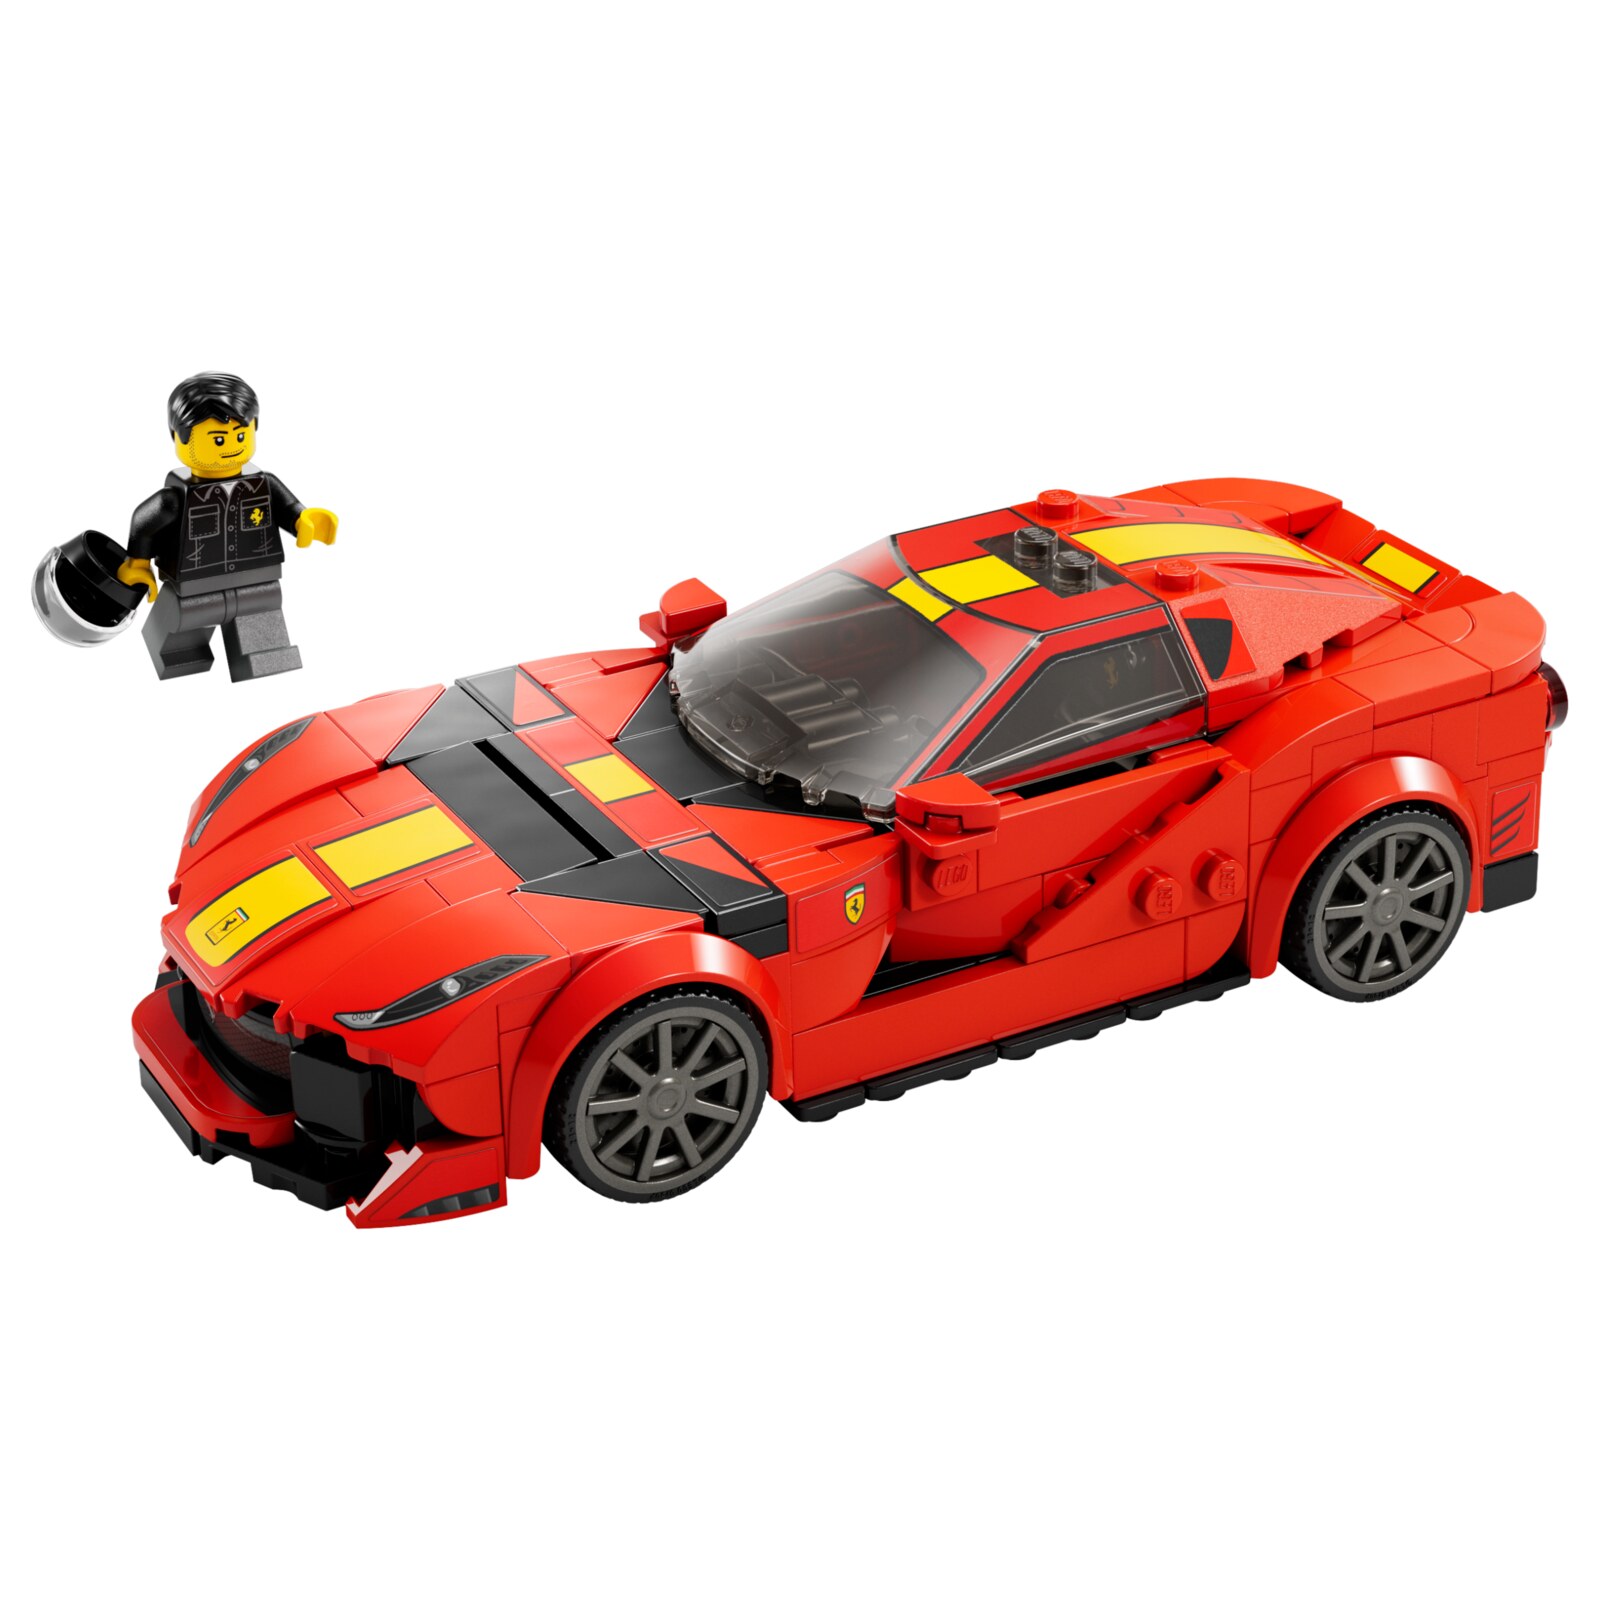 Конструктор LEGO Speed Champions Ferrari 812 Competizione, 261 деталь, 76914 конструктор lego speed champions пункт техобслуживания mclaren mercedes 75911